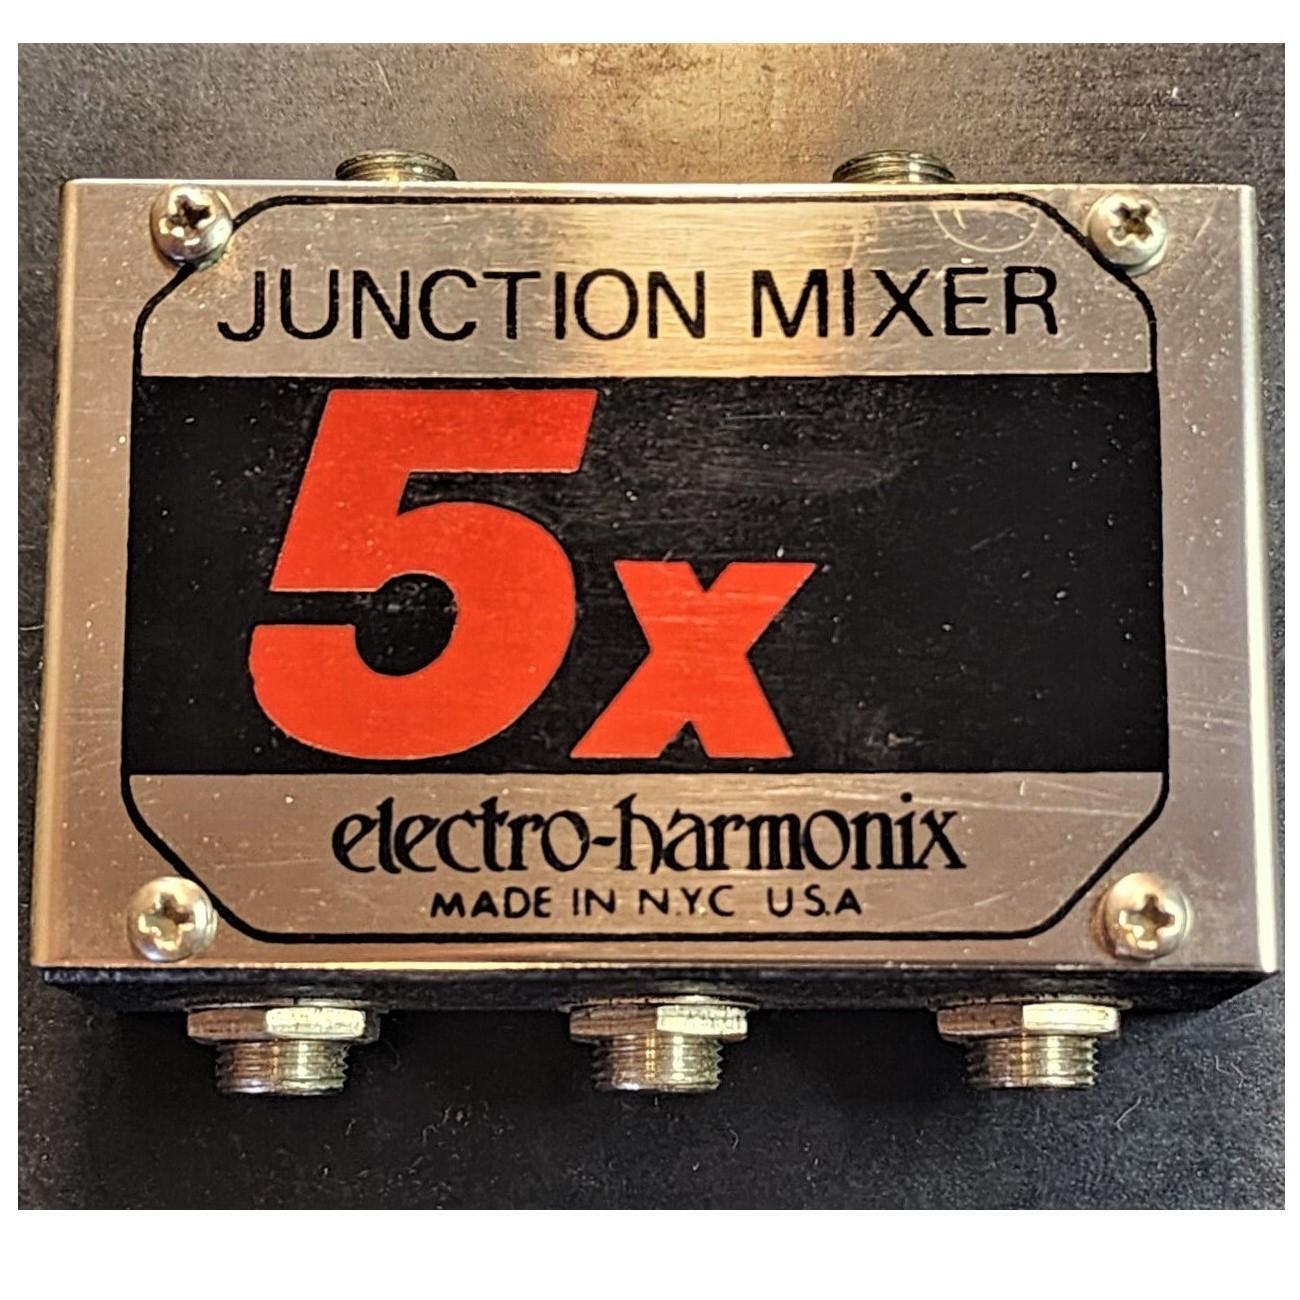 Used Electro-Harmonix 5x Junction Mixer - Sweetwater's Gear Exchange